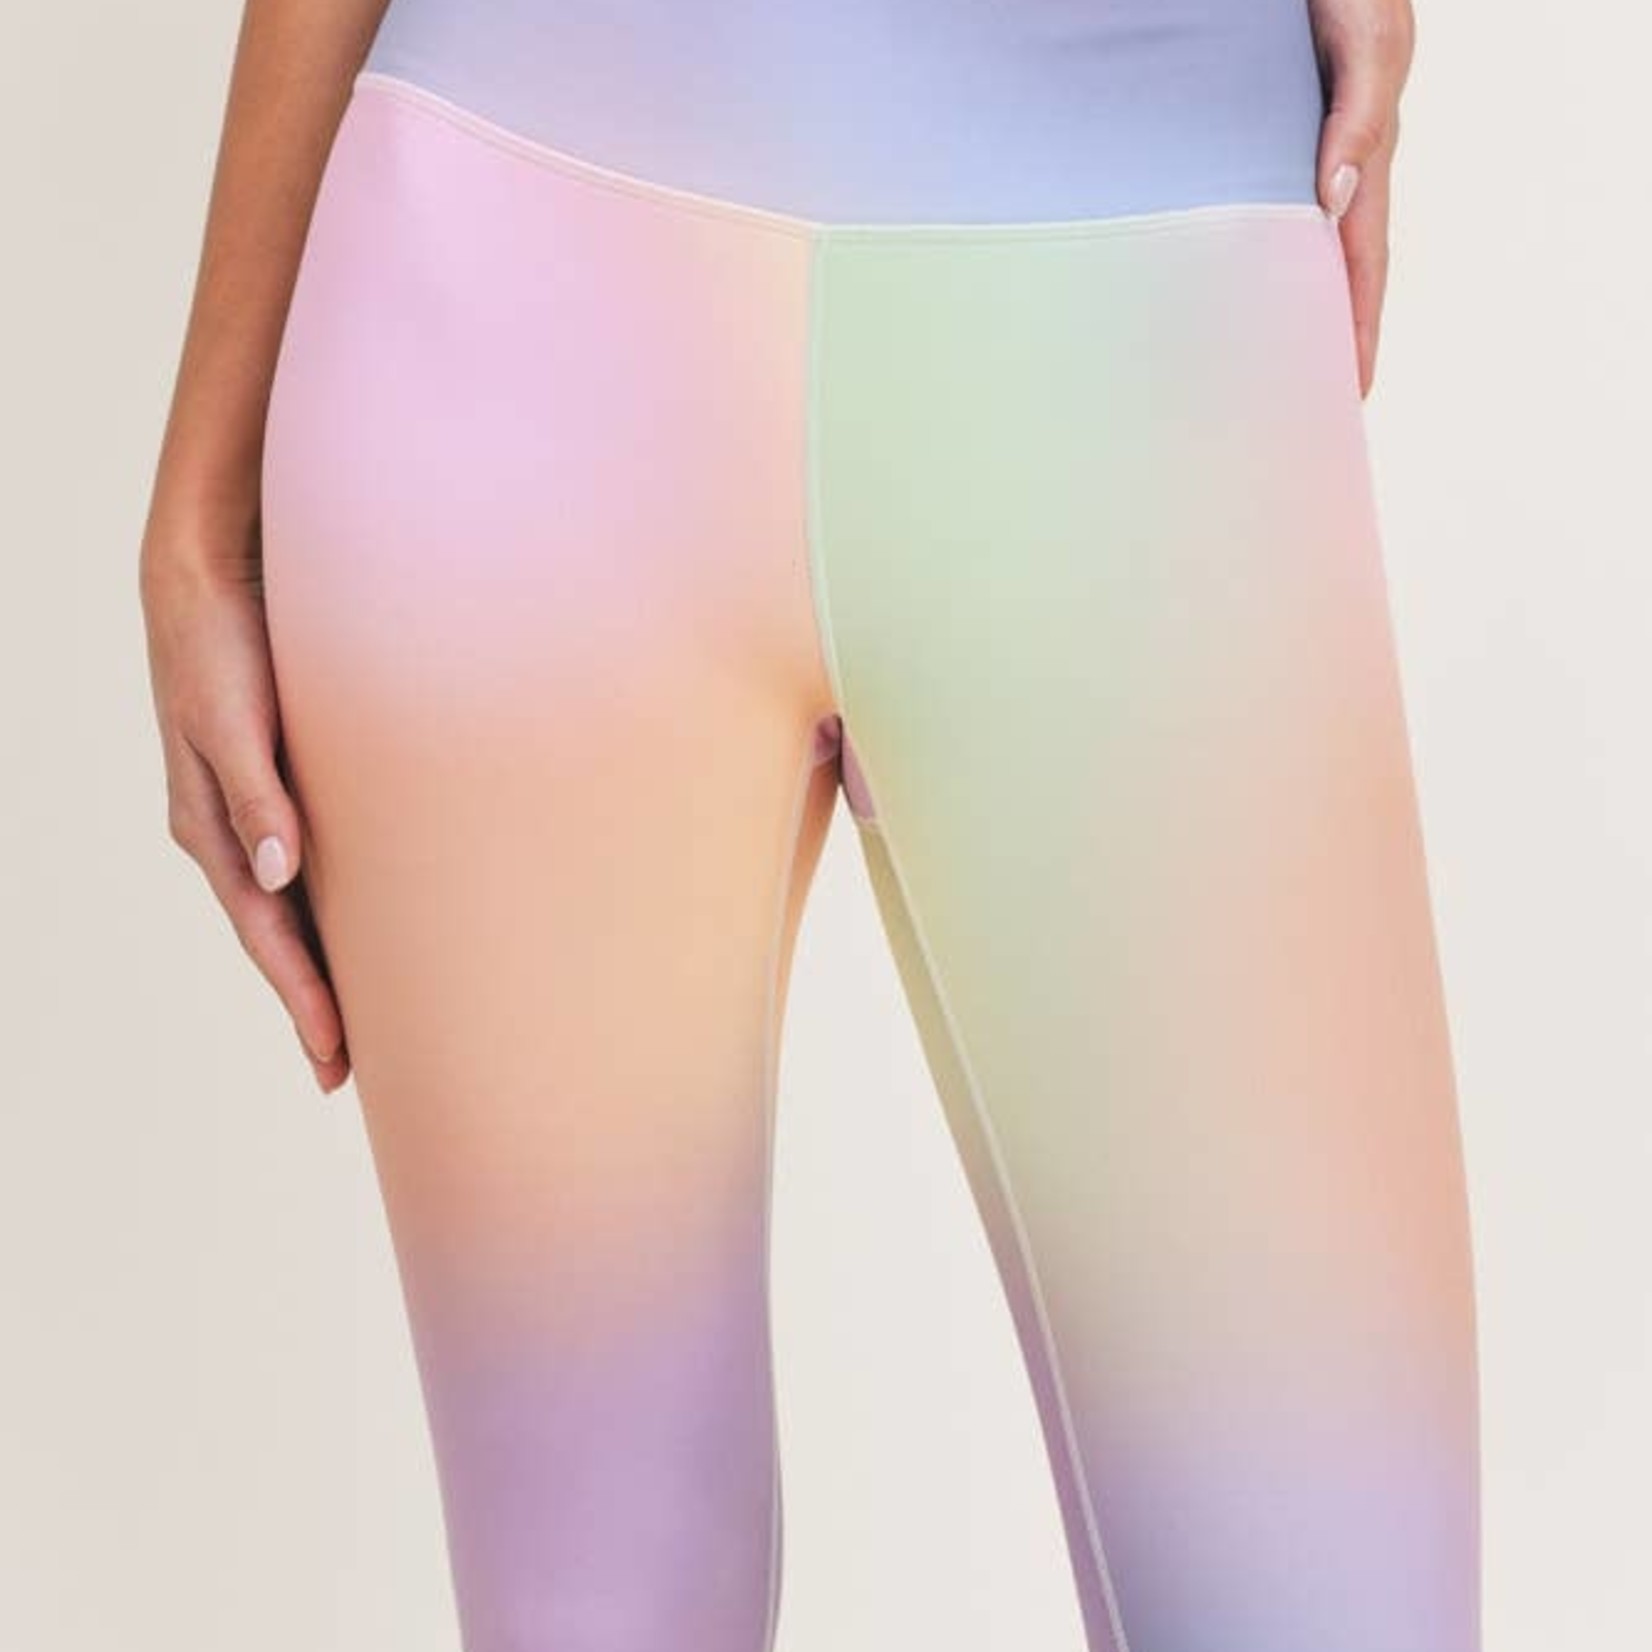 Buy Rainbow Leggings Rainbow Shimmer Leggings Metallic Rainbow